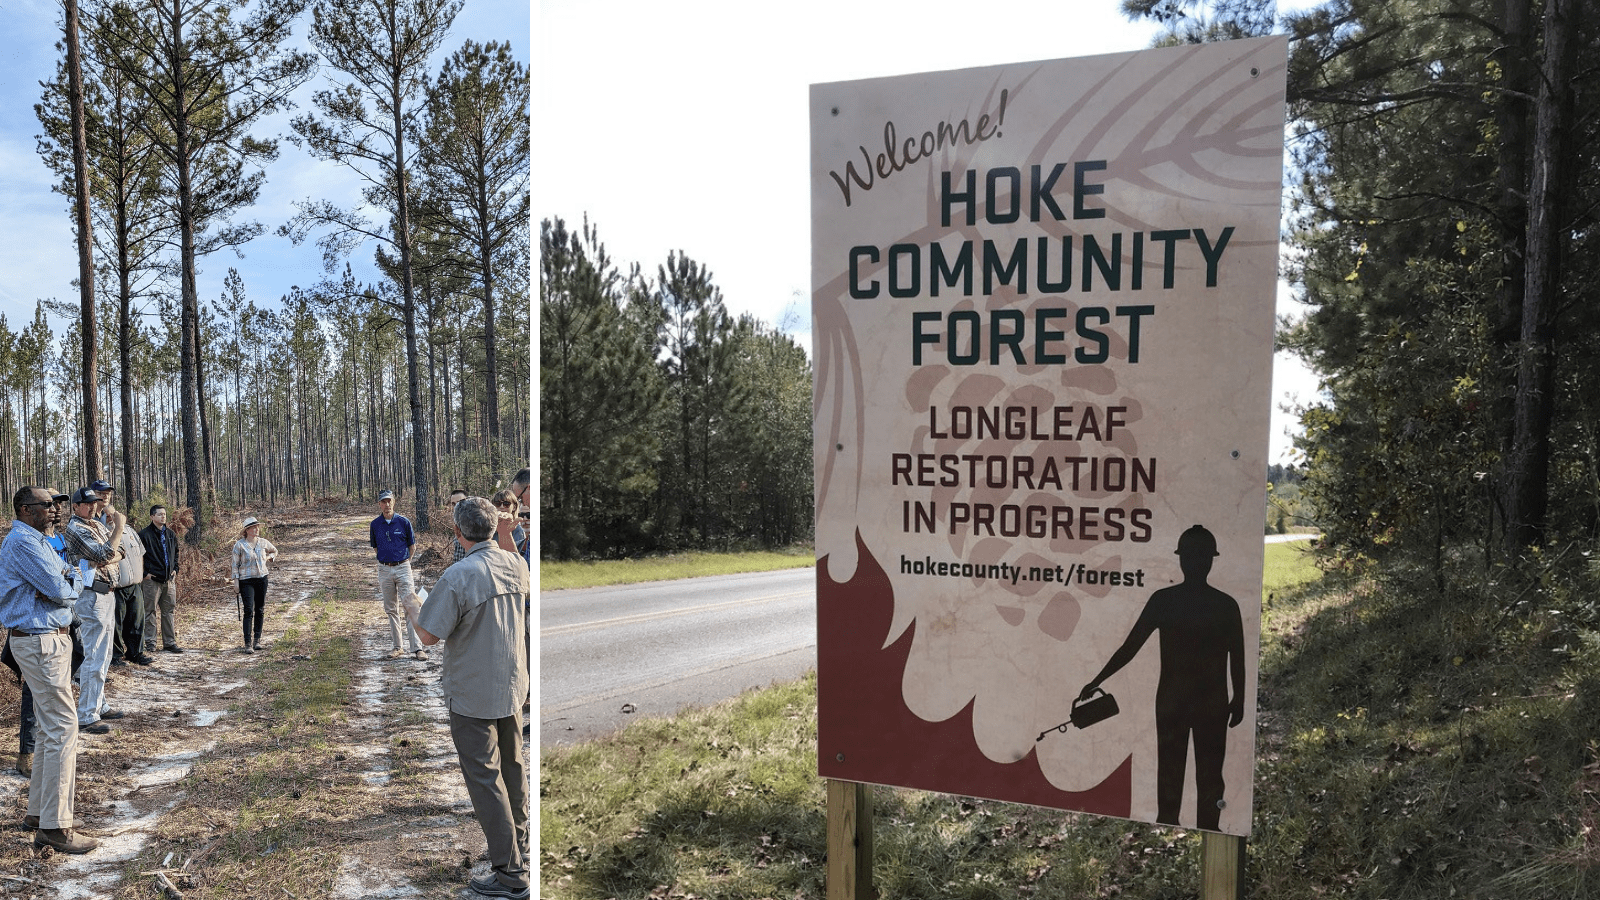 Hoke community forest sign